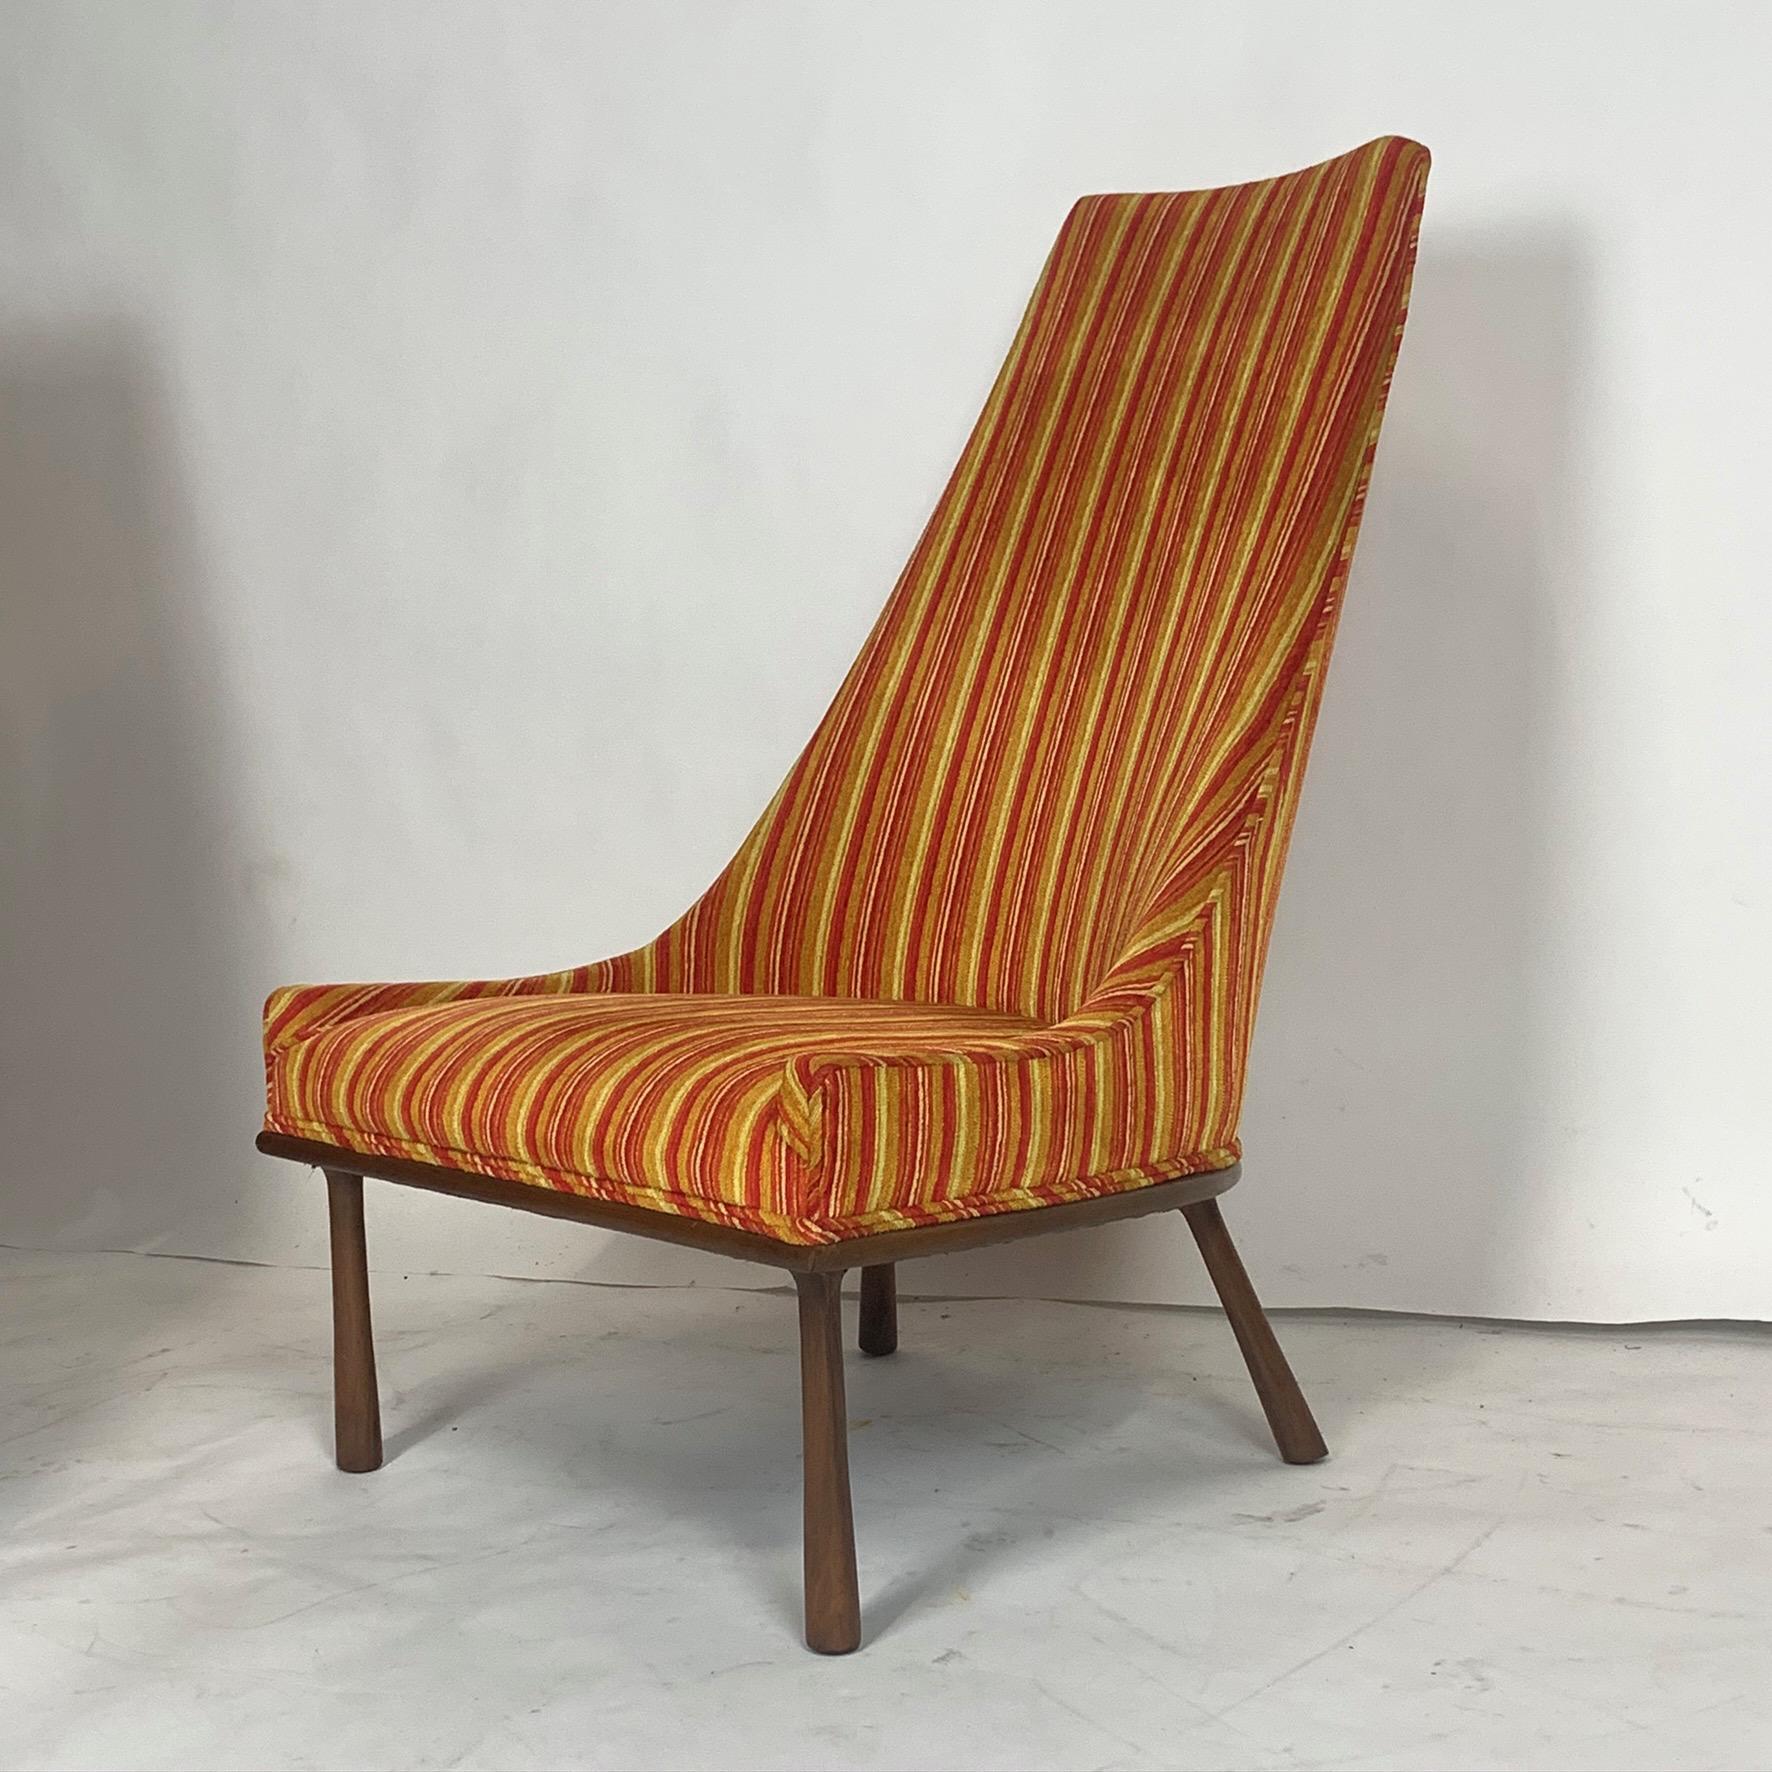 20th Century Sleek Sculptural High Back Chairs 1960s Mid-Century Modern Velvet and Walnut